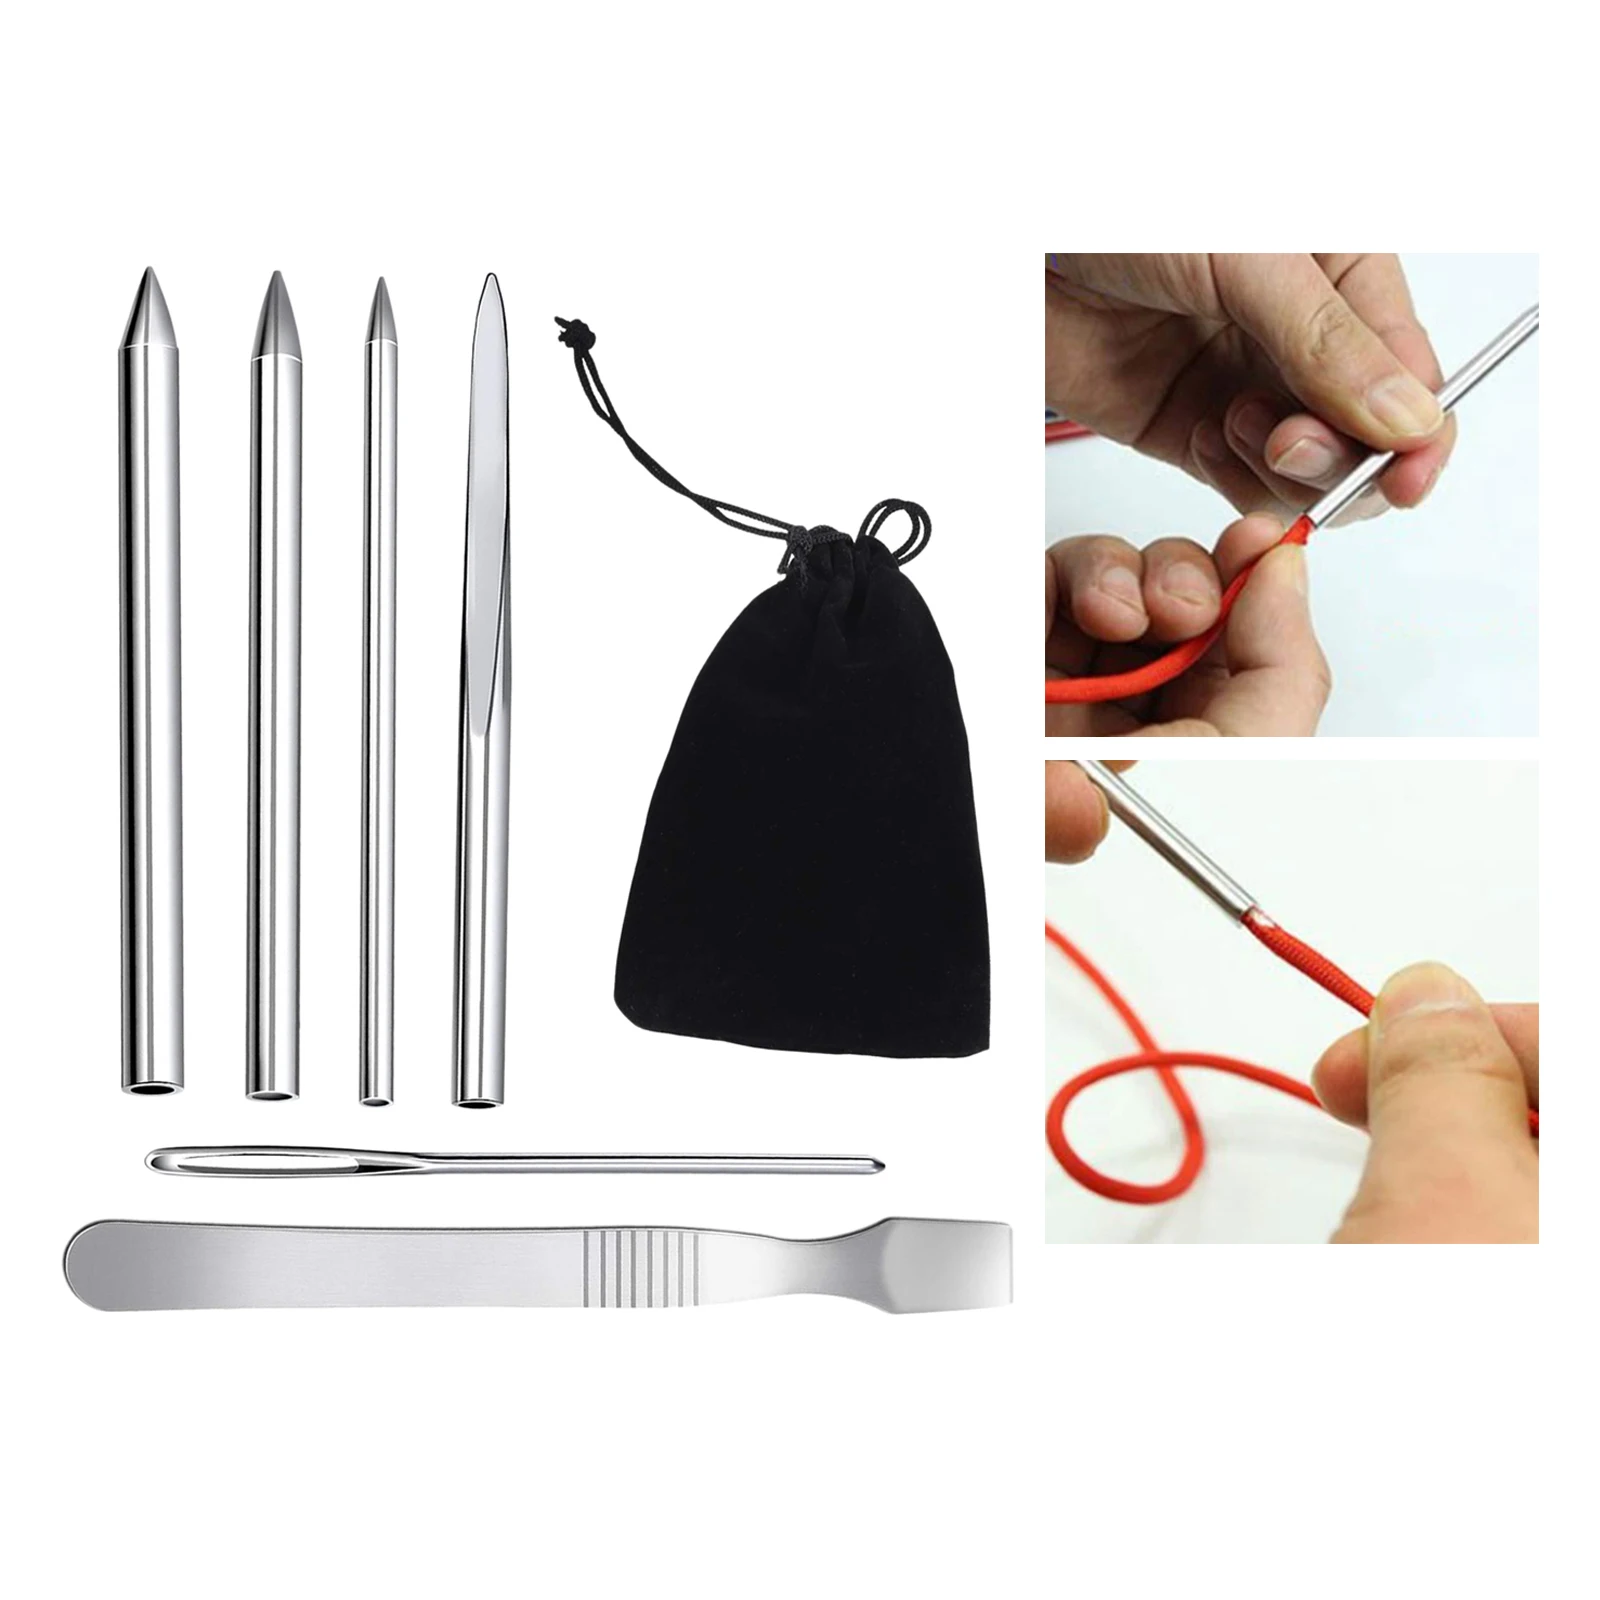 Paracord Fid Lacing Needles Set Stainless Steel Bracelet Stitching Tools  DIY Bracelet Knitting Needle 4pcs/9pcs/12pcs